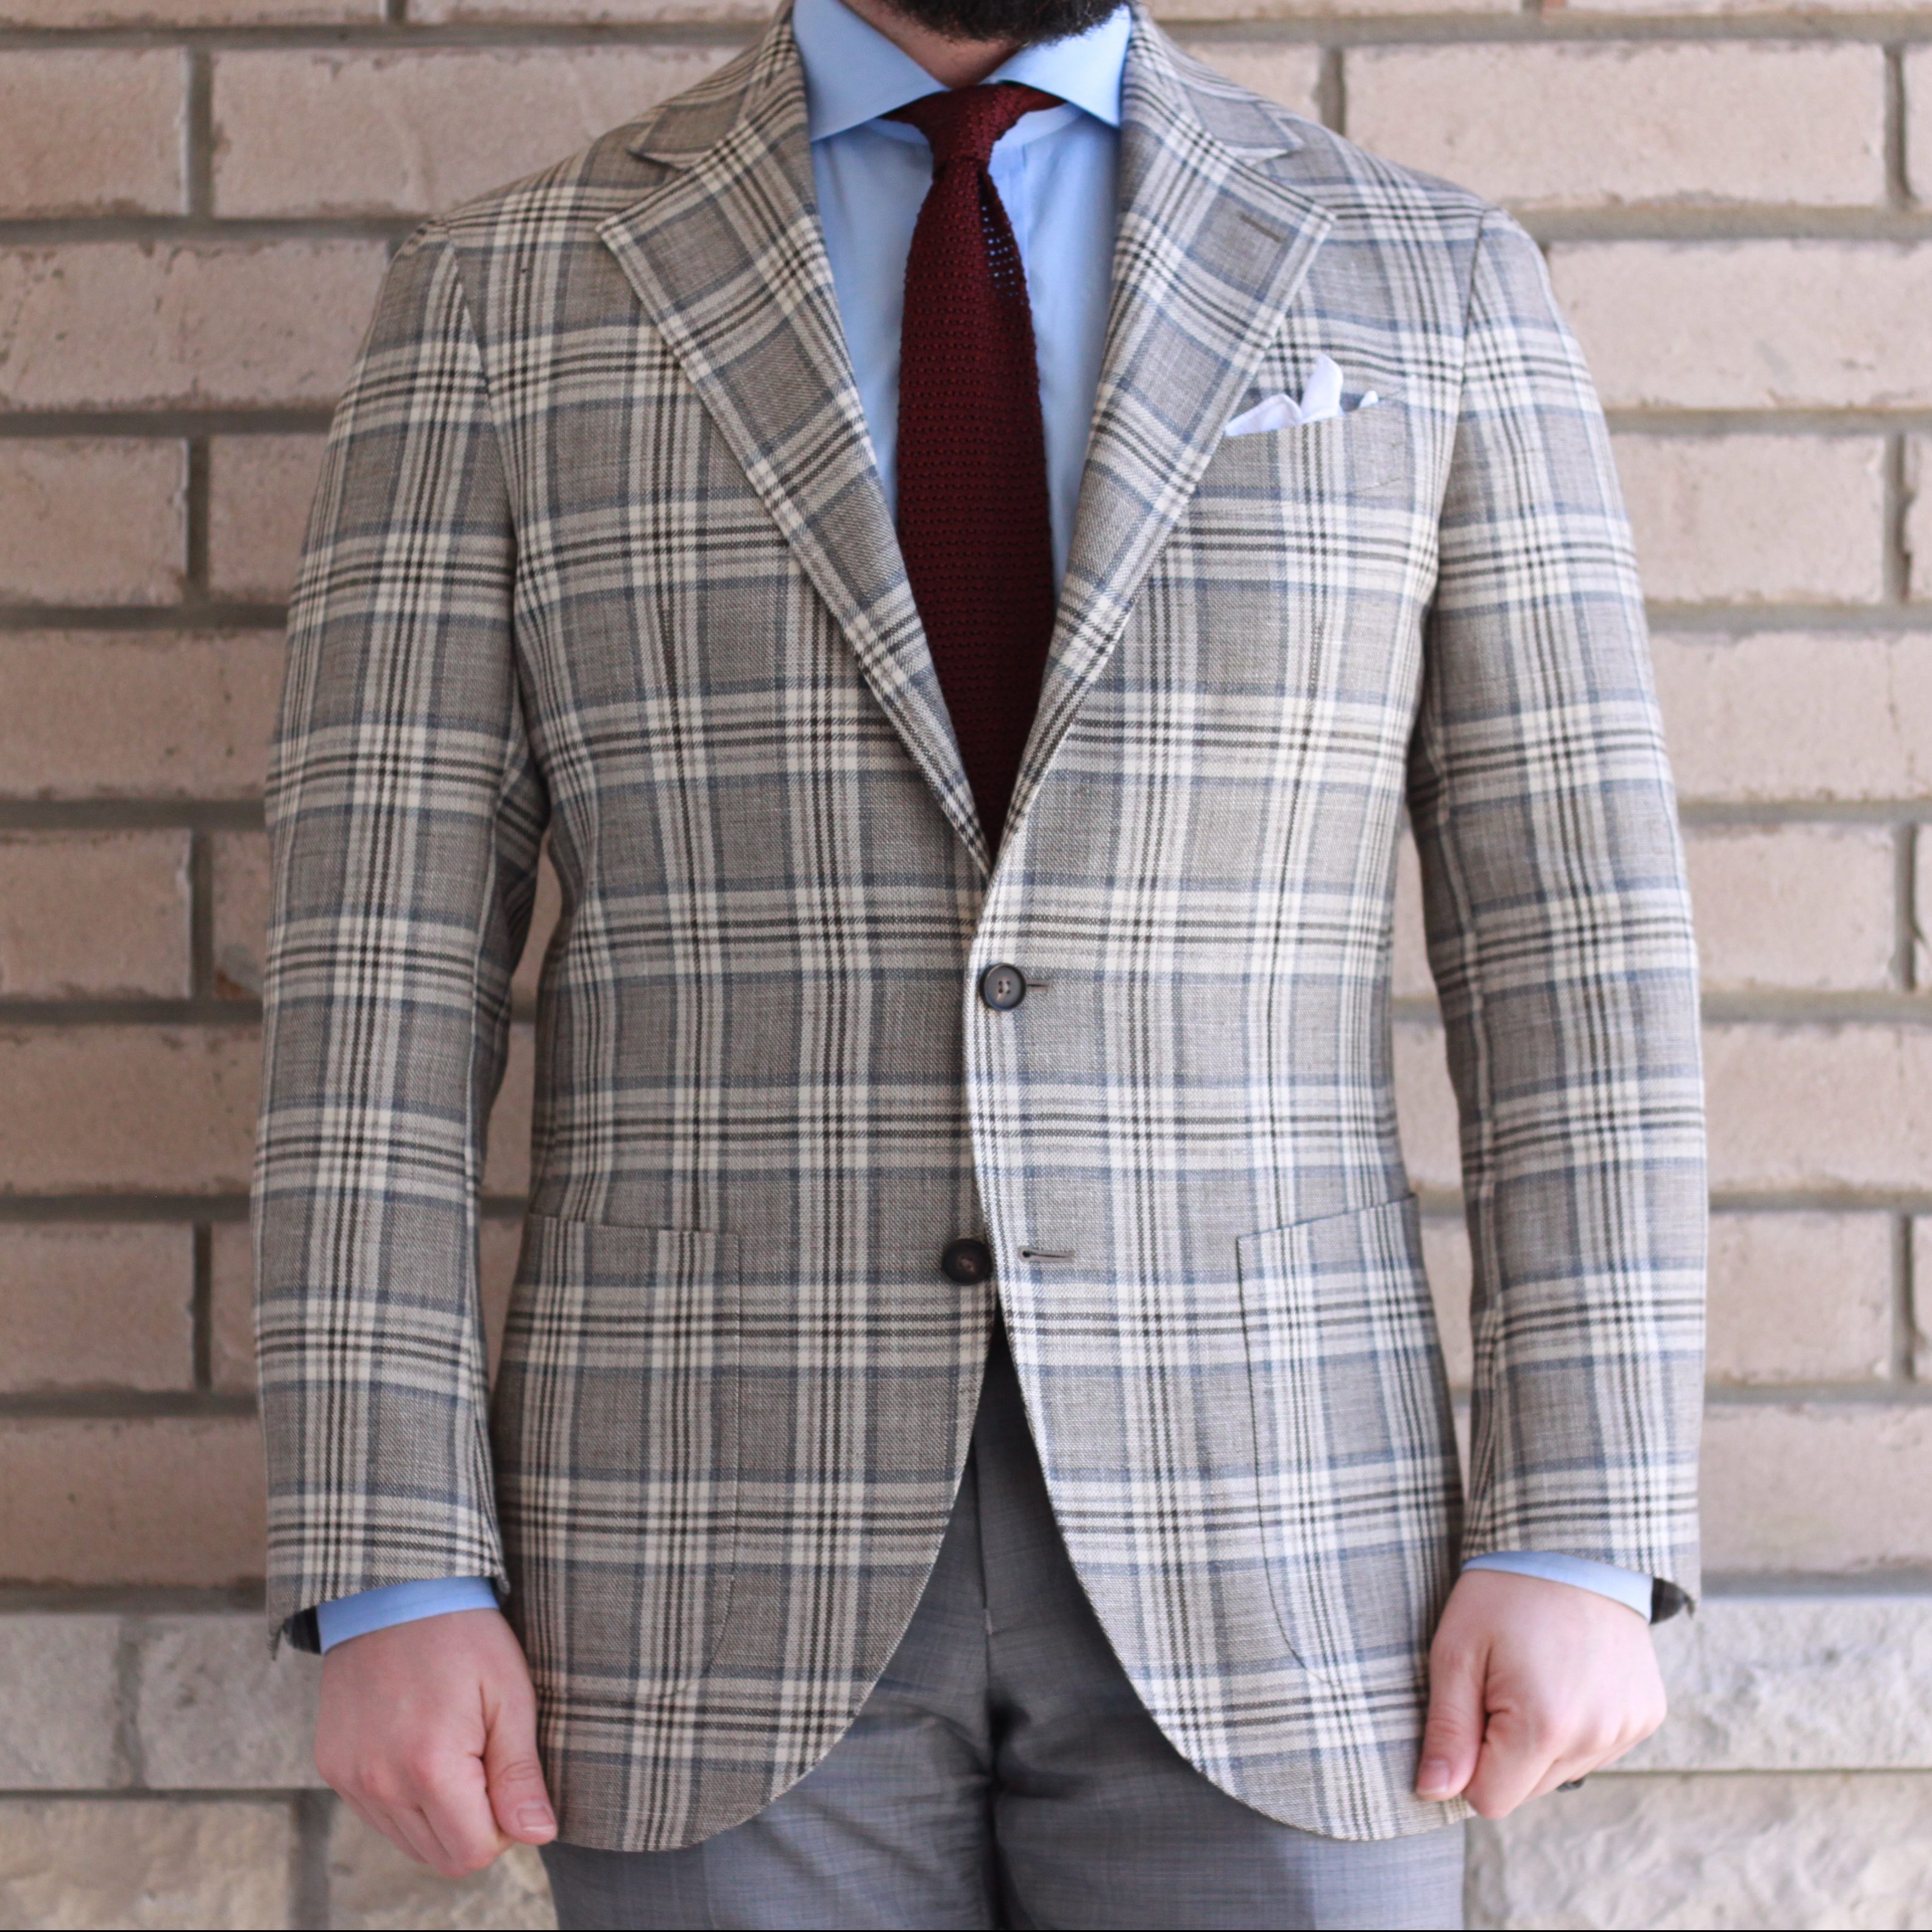 Spier & Mackay neapolitan, sport coat, e. thomas, pattern, spring/summer, odd jacket, knit tie